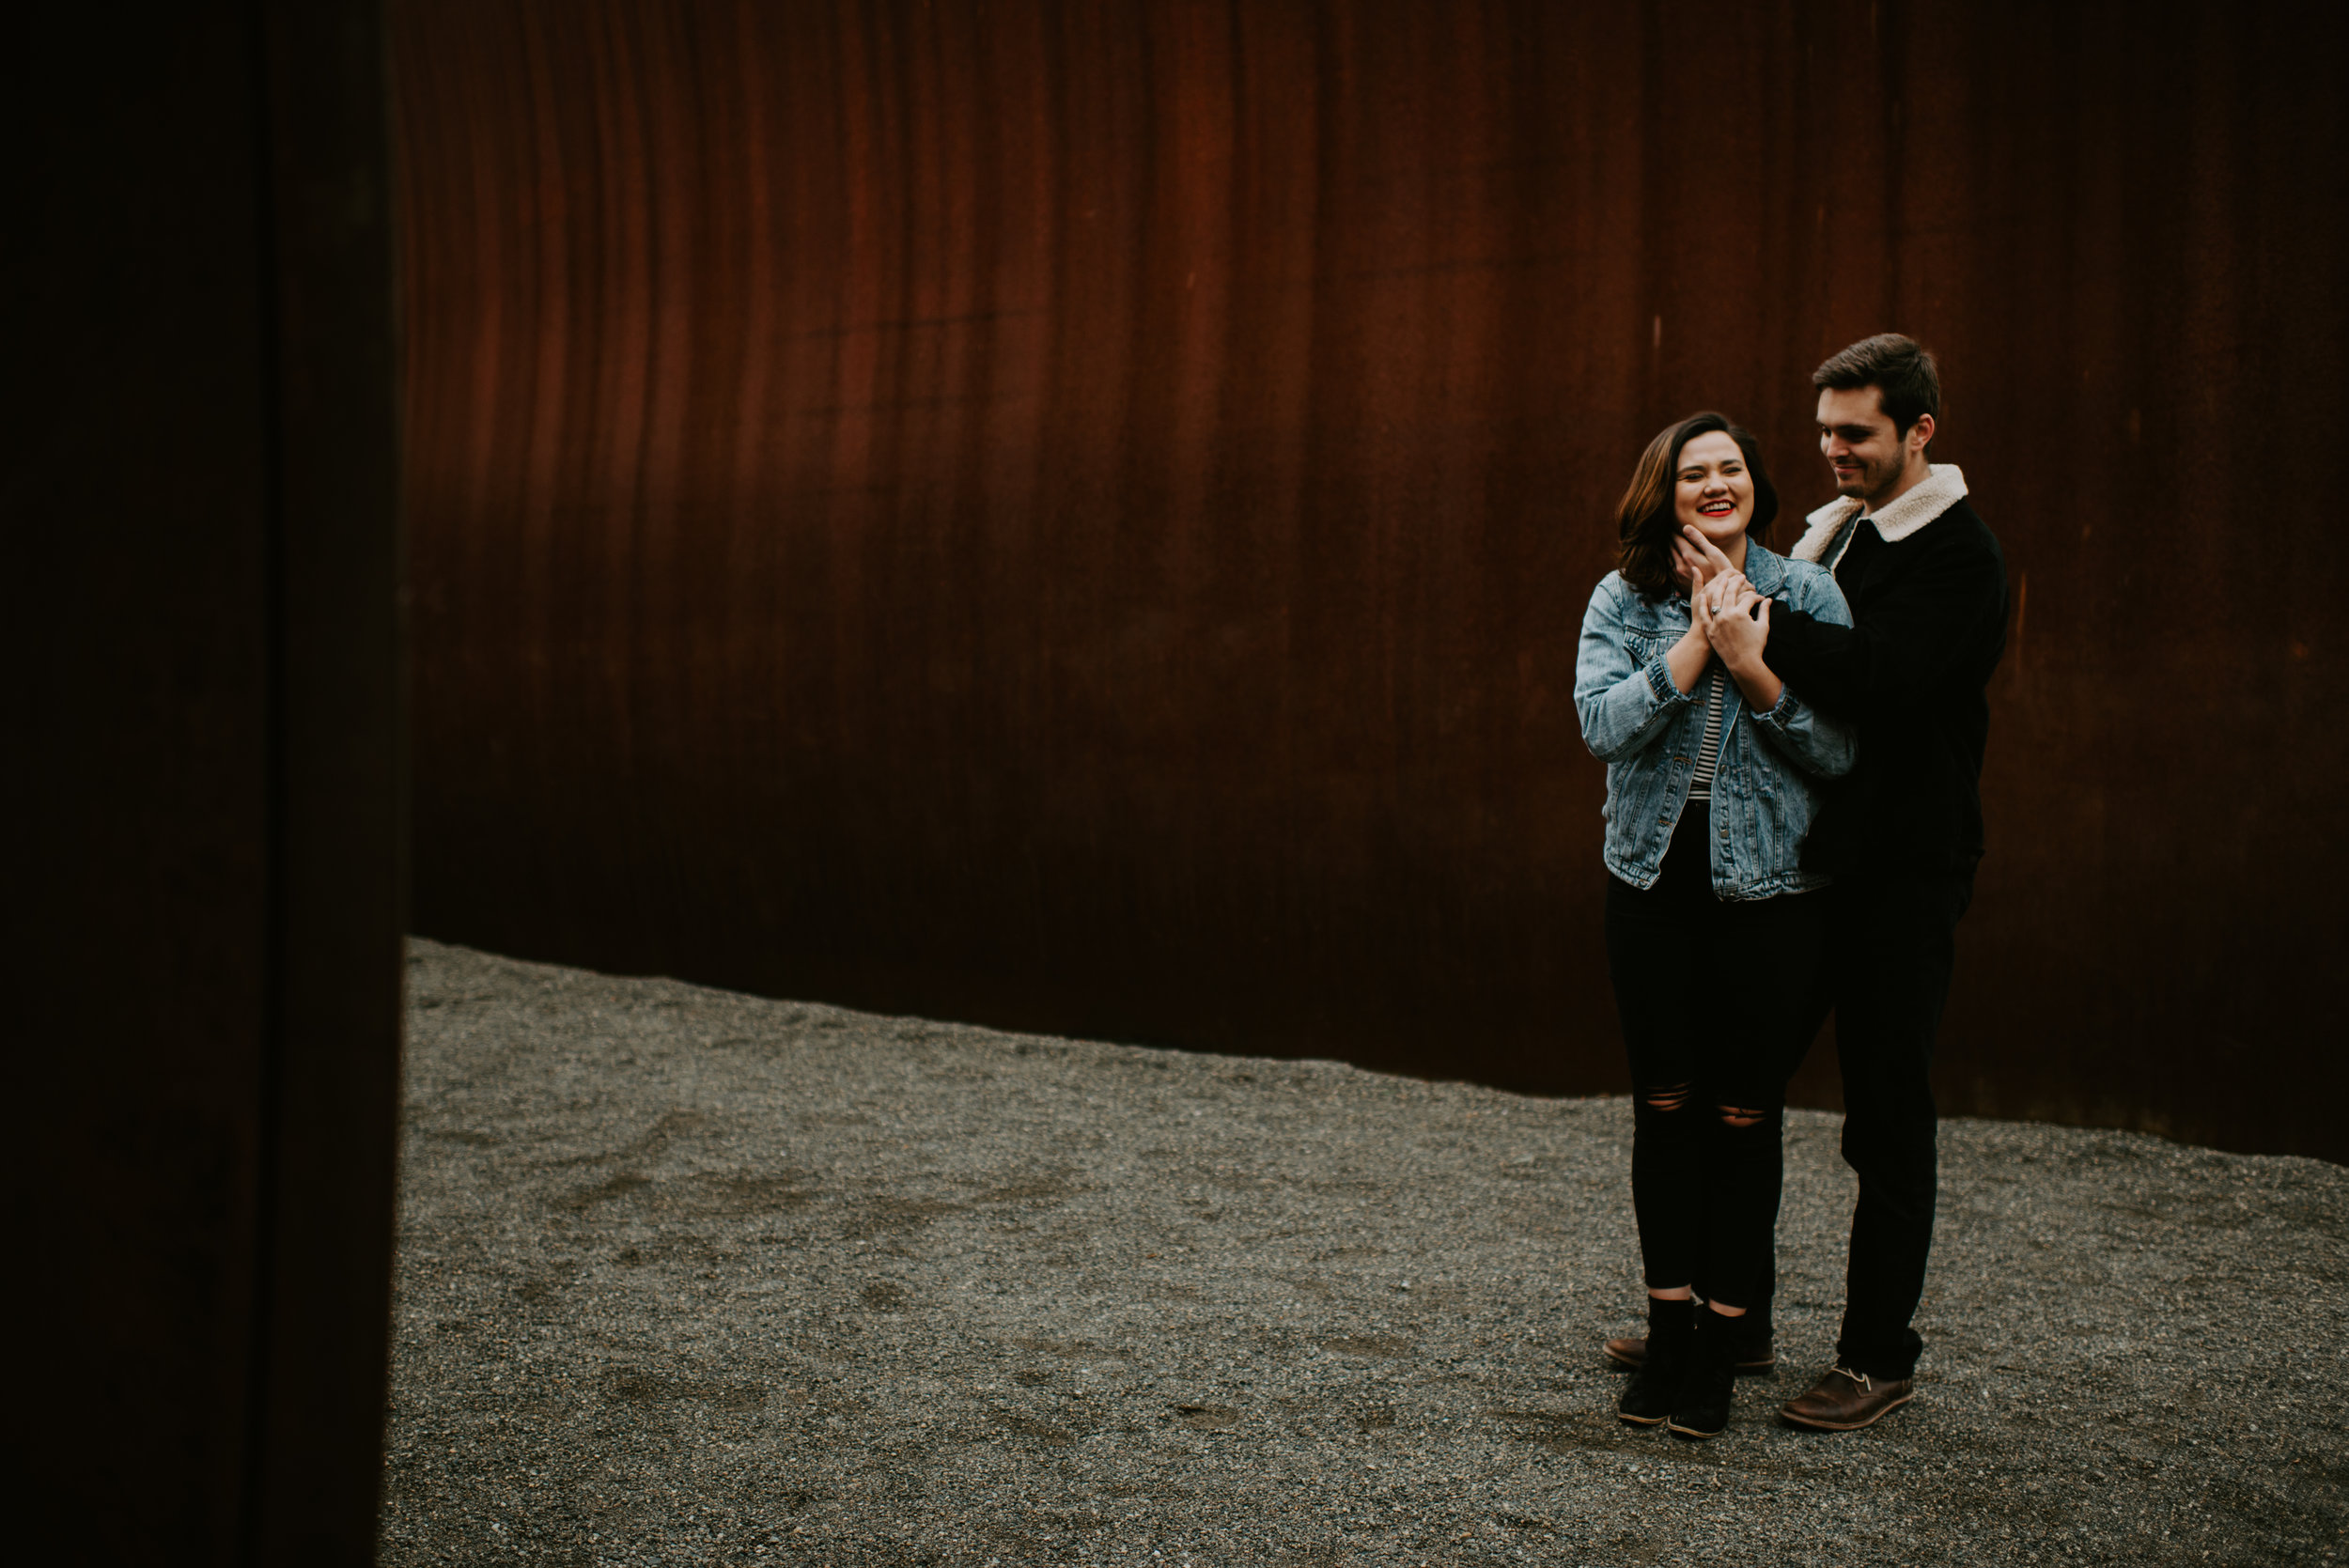  Kamra Fuller Photography - Seattle Couple’s Photographer - Seattle Wedding Photographer - Seattle Photographer - Belltown Couple’s Session - Urban Couple’s Session - Urban Seattle Photography - Belltown Photographer - NYC Photographer - NYC Wedding 